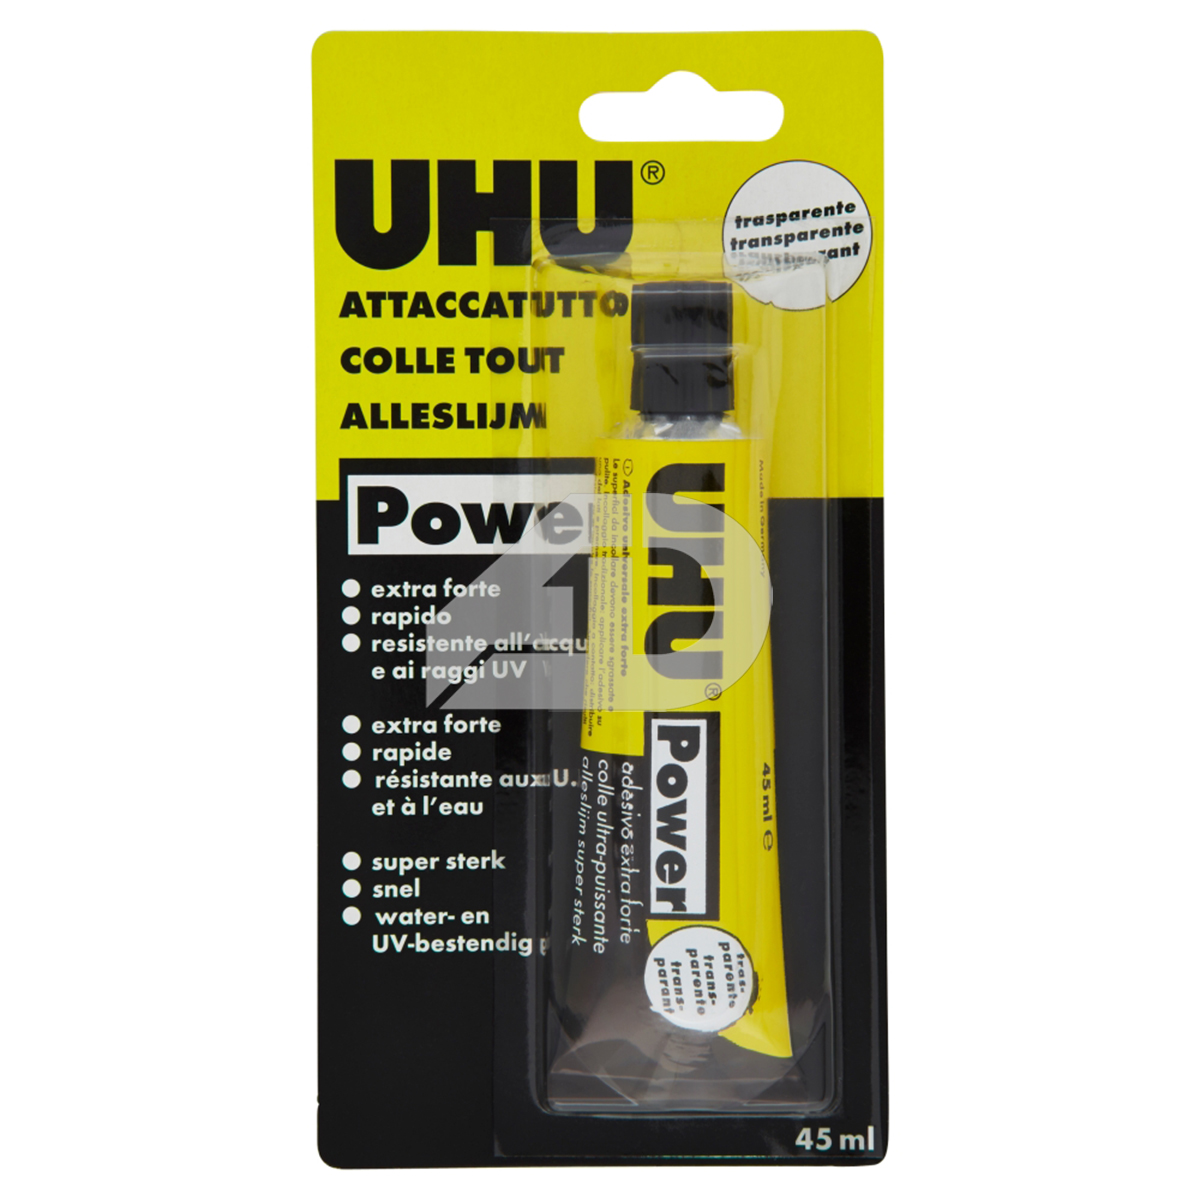 Colla poliuretanica universale UHU Power D3251 45 ml trasparente